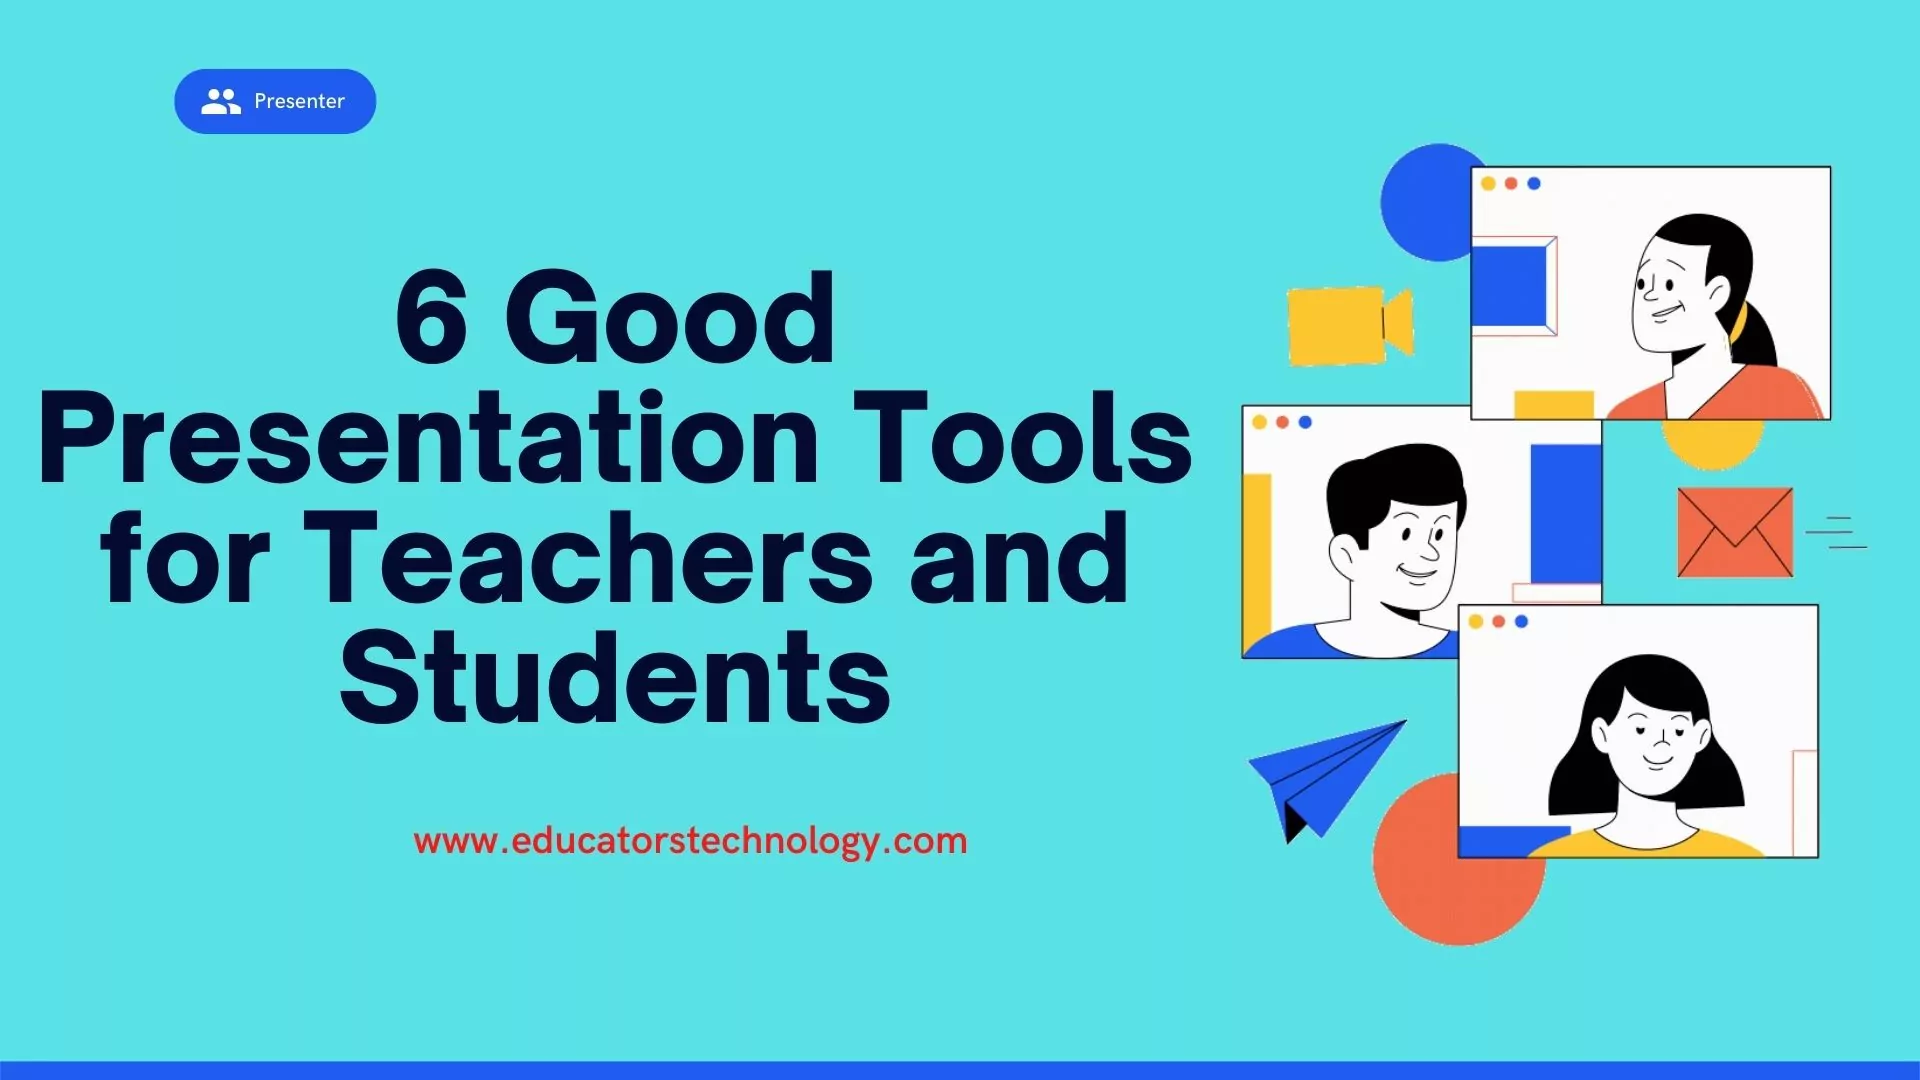 Presentation tools for teachers